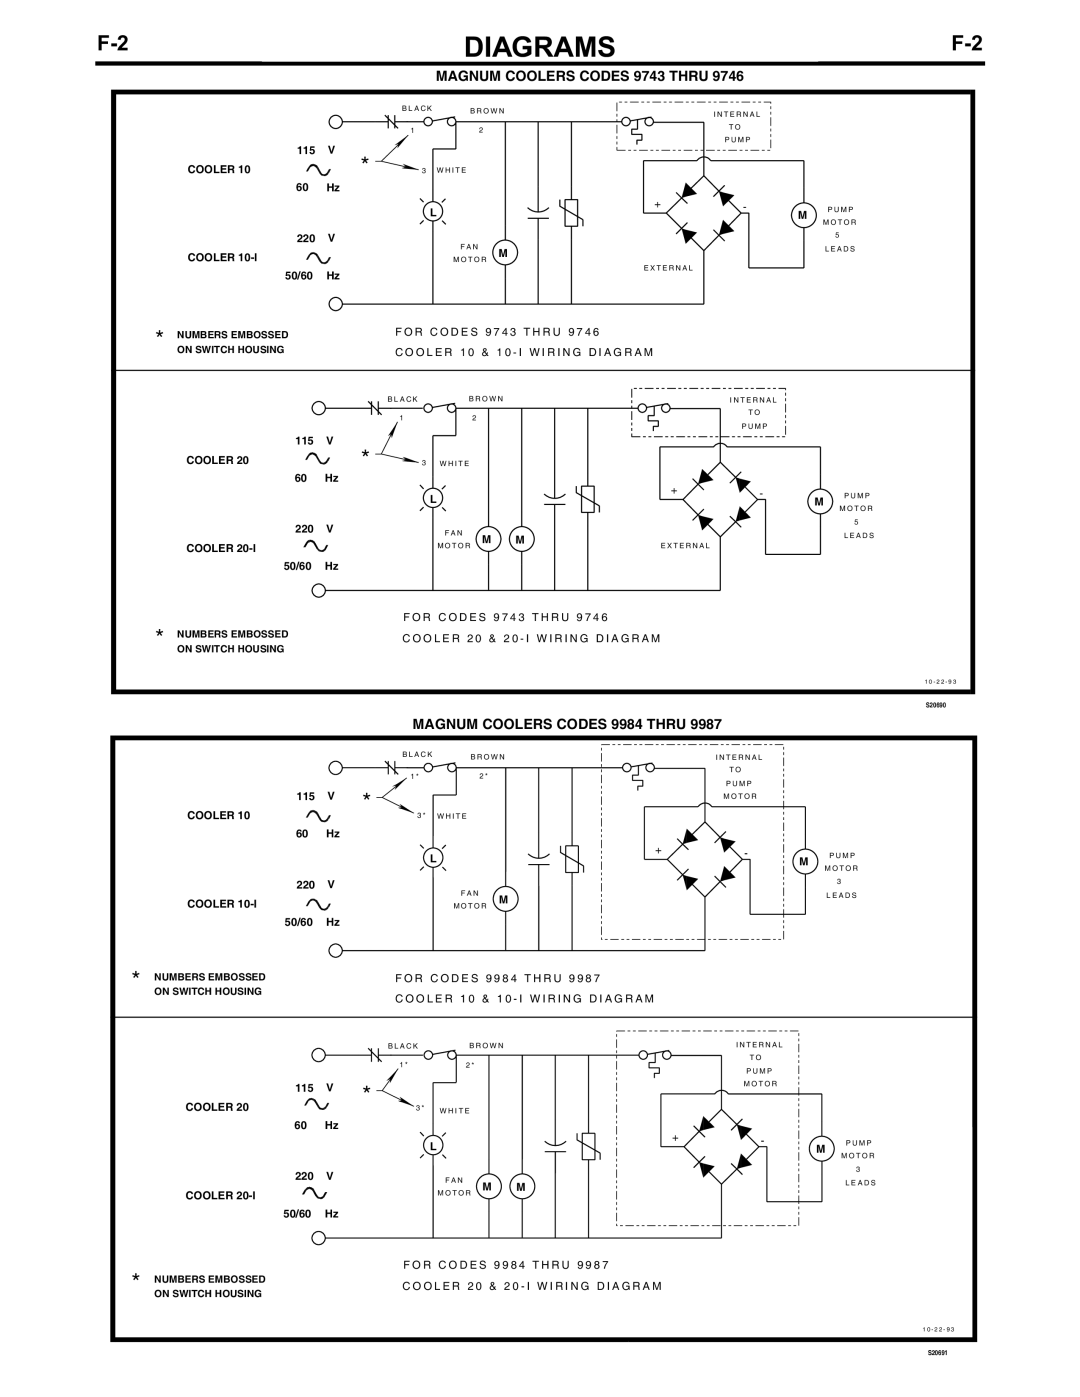 Lincoln Electric IM438-B manual Diagrams, MAGNUM COOLERS CODES 9743 THRU, MAGNUM COOLERS CODES 9984 THRU 